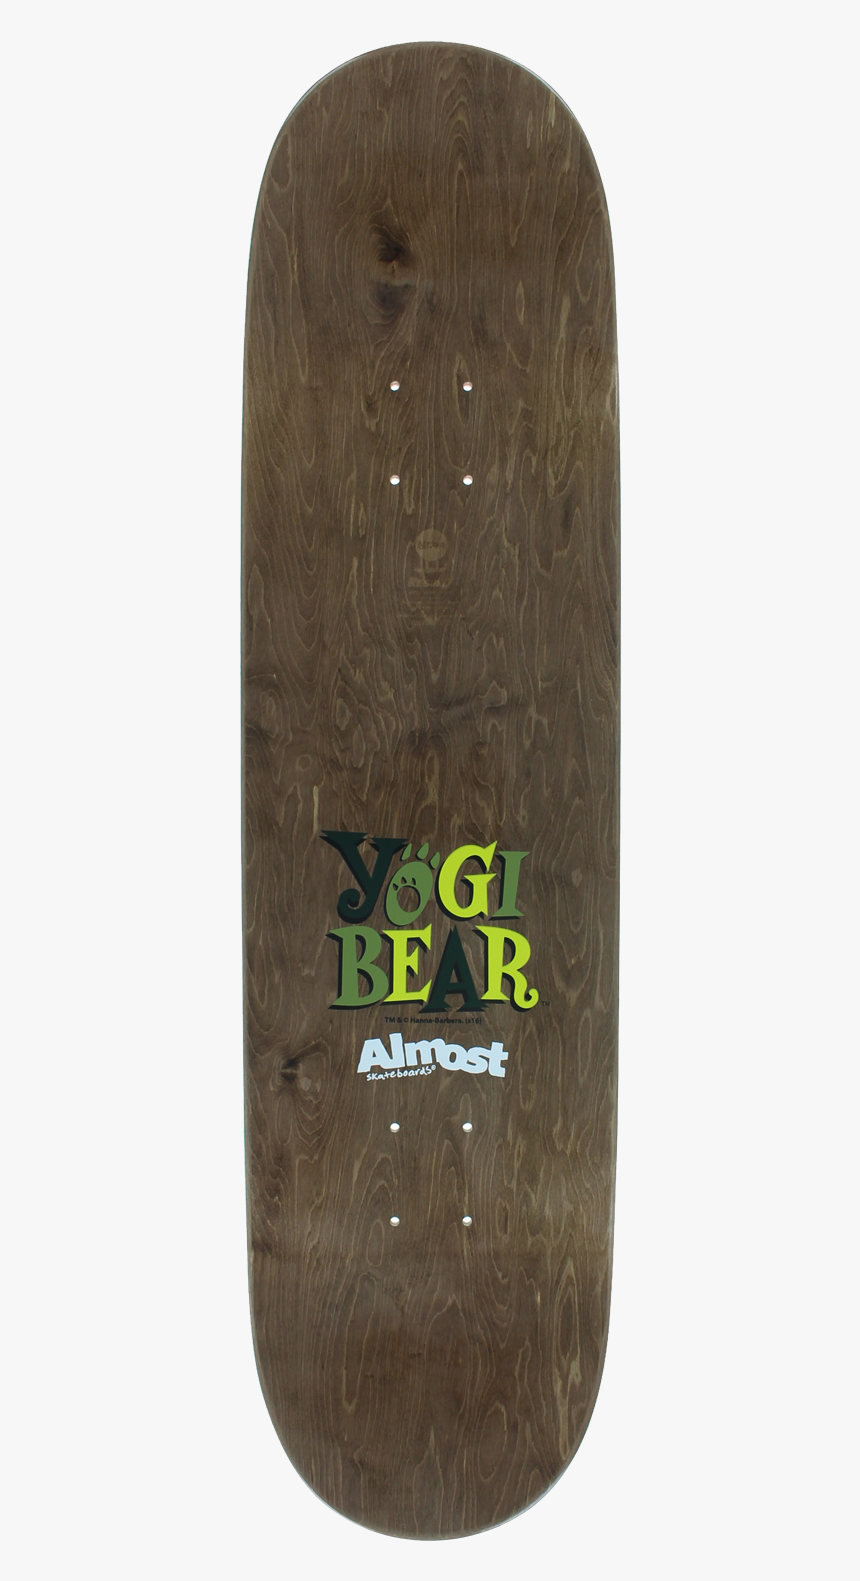 Almost Wilt Yogi Bear Skateboard Deck - Almost Skateboards, HD Png Download, Free Download